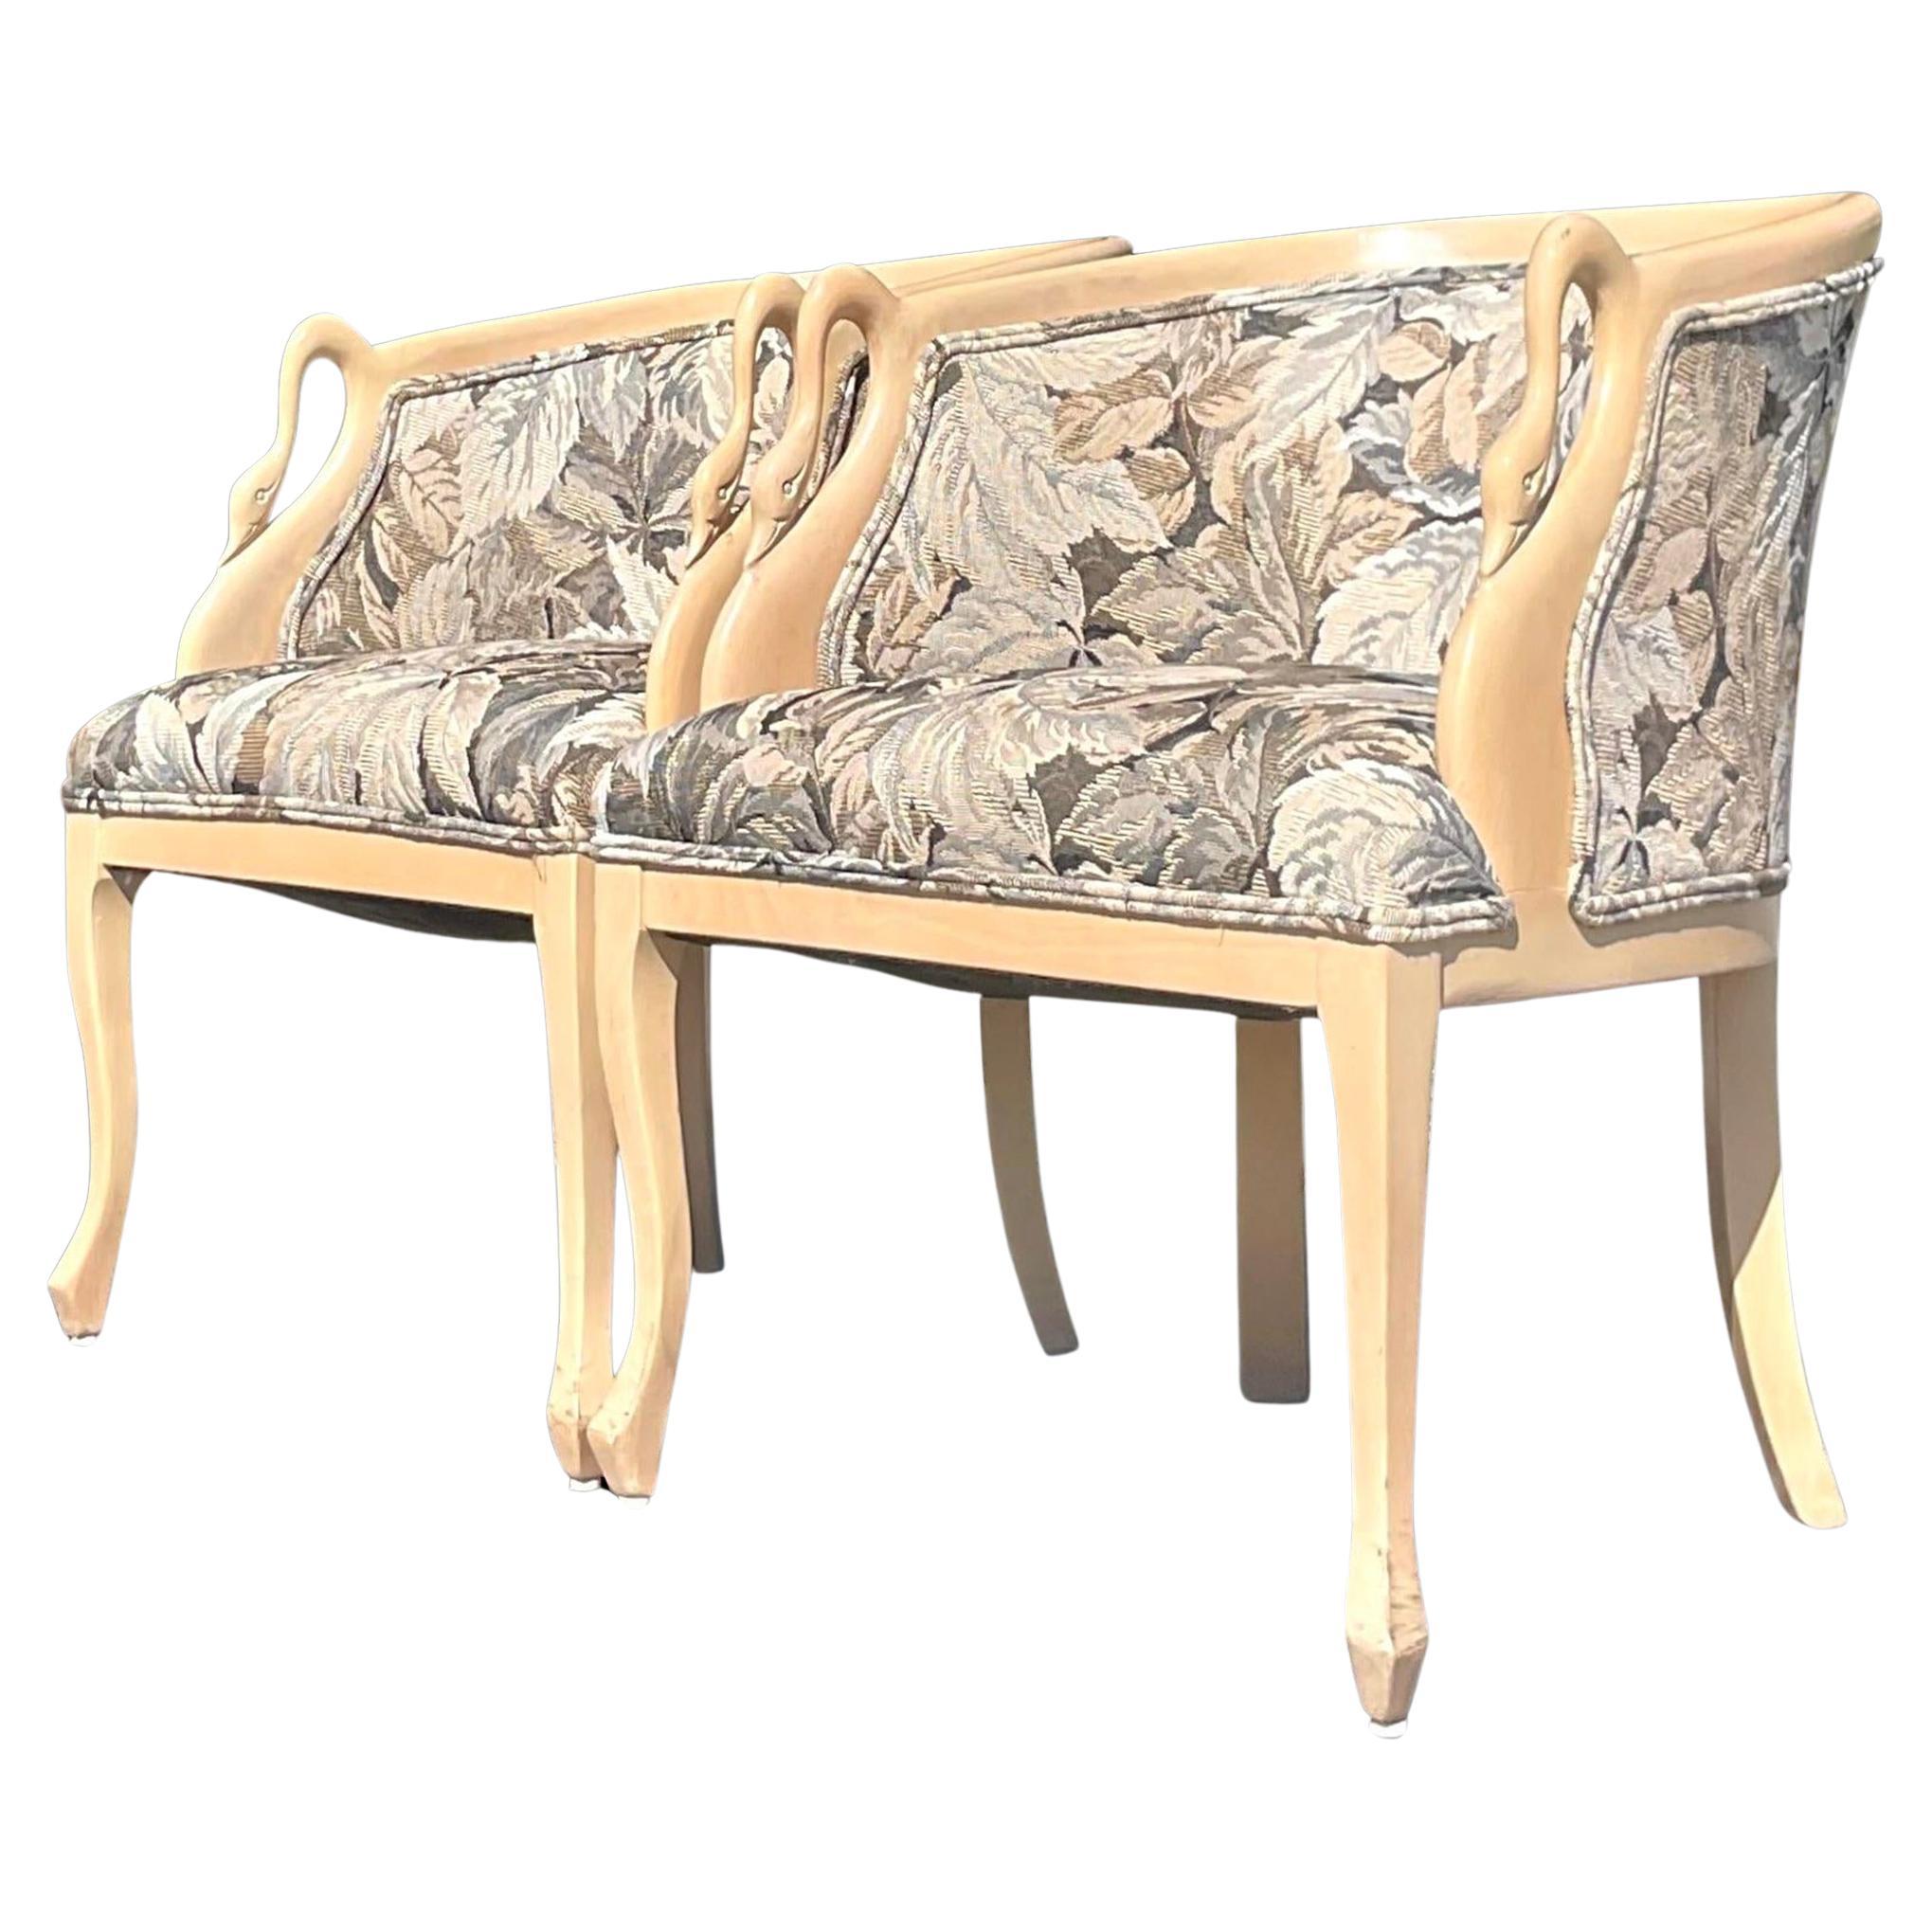 Vintage Regency geschnitzt Swan Kopf Lounge Chairs - ein Paar